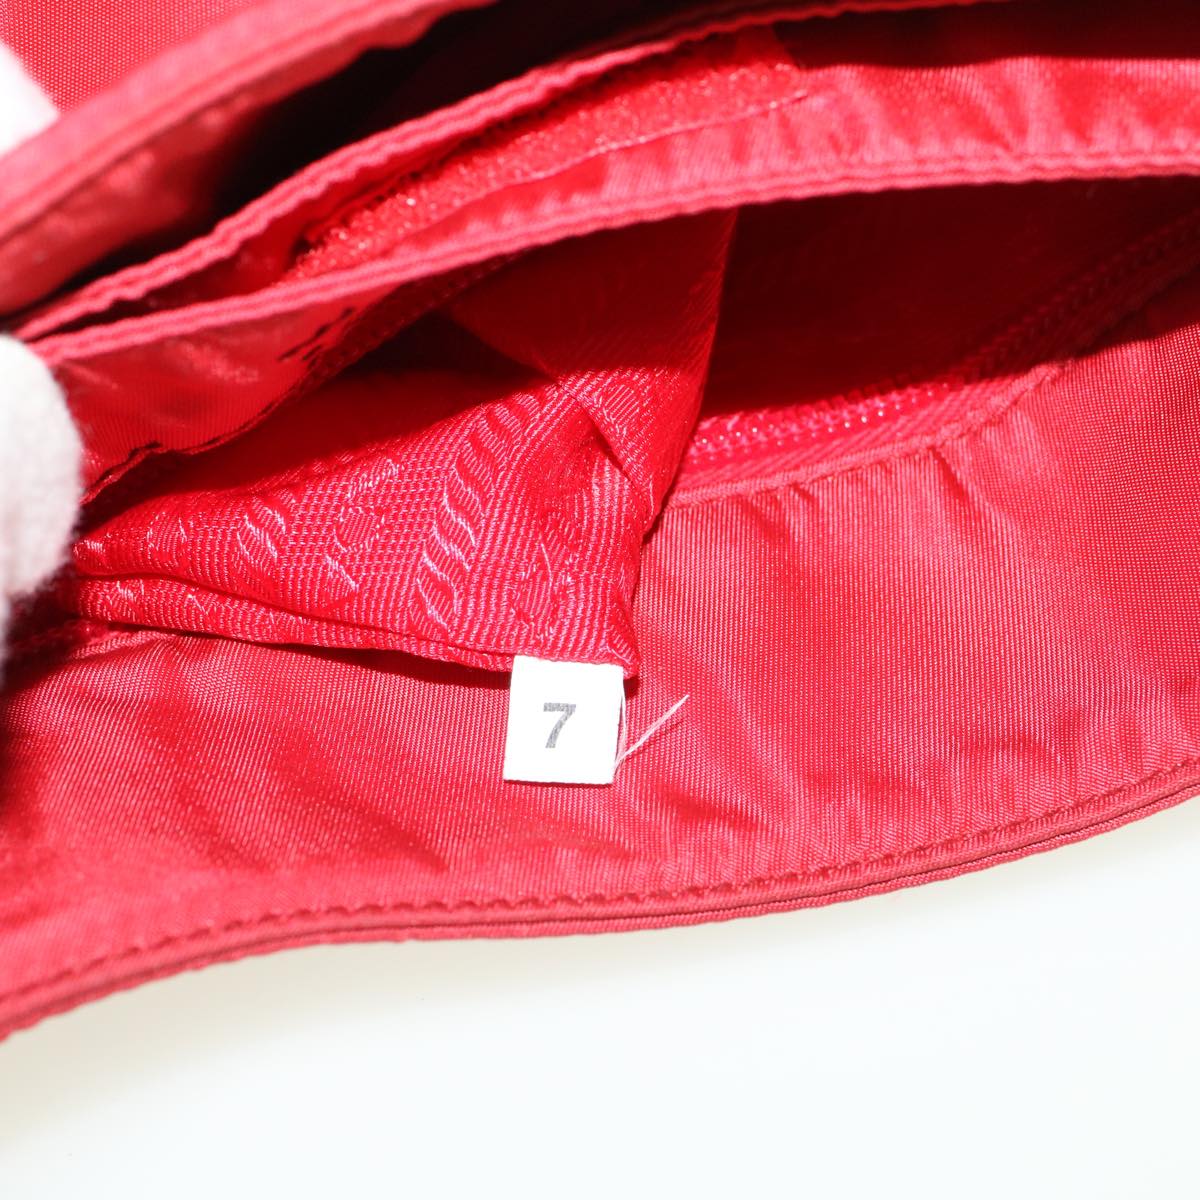 PRADA Shoulder Bag Nylon Red Auth fm2932